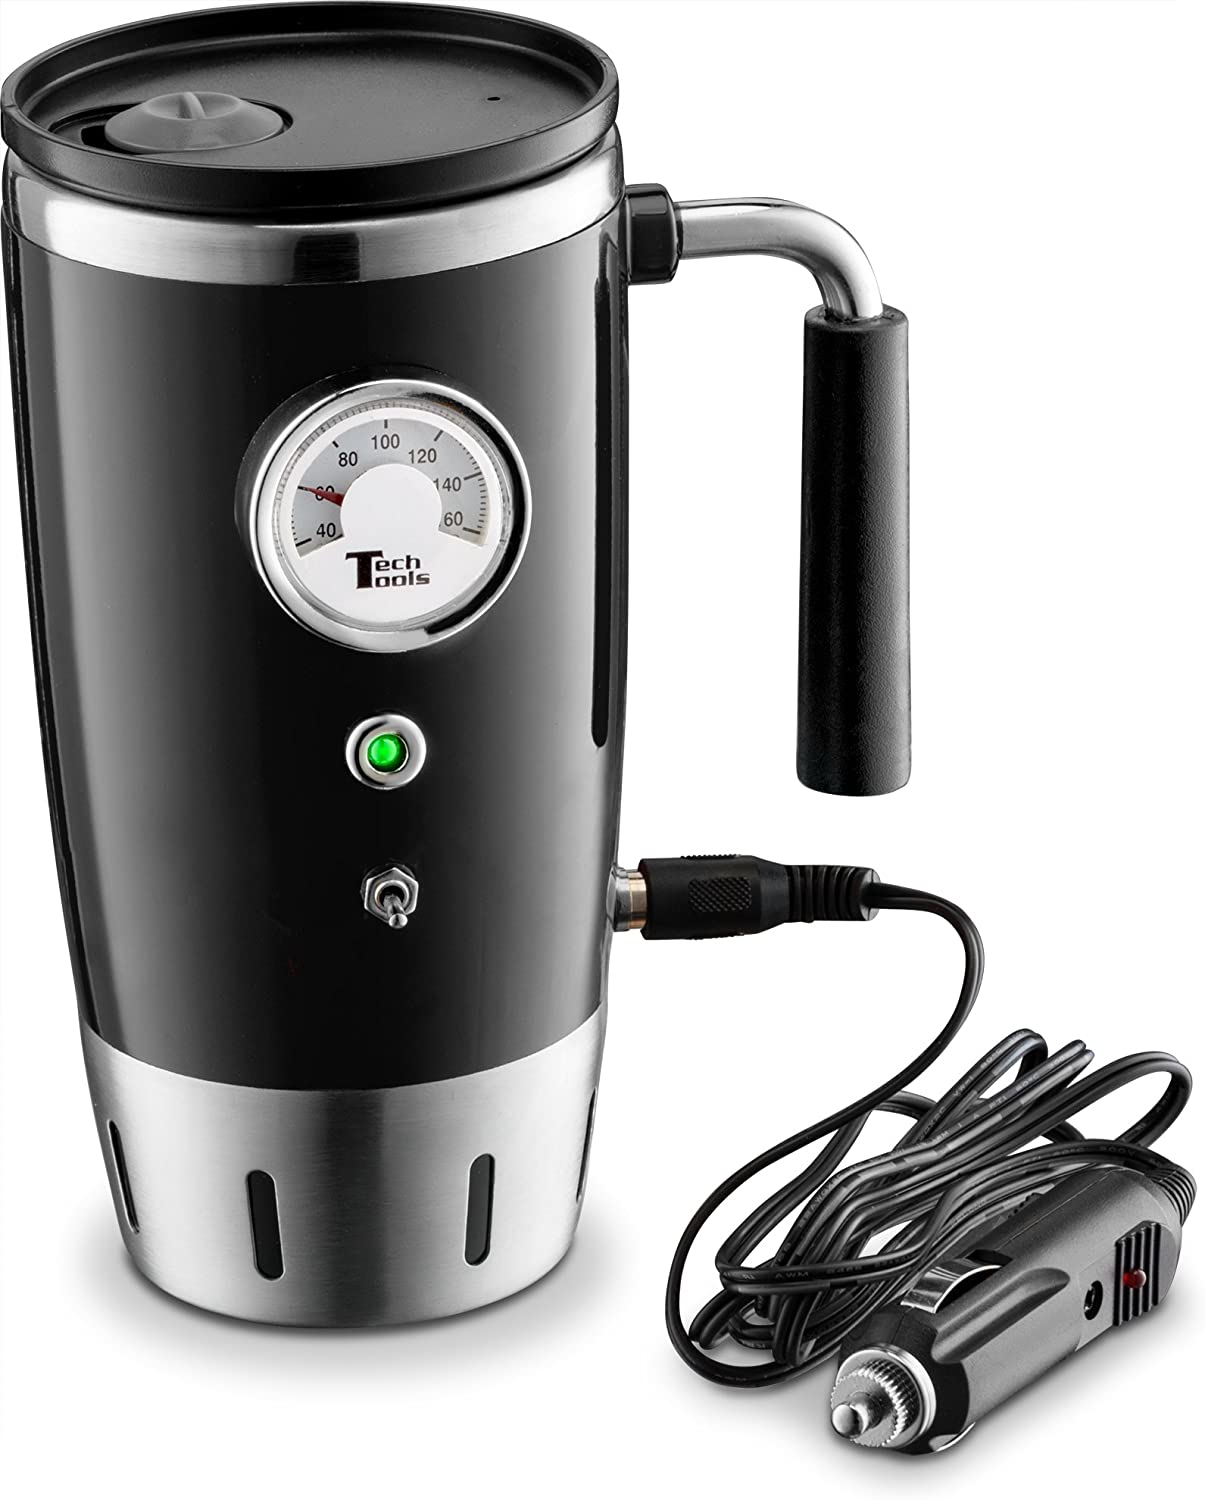 Nextmug Self-Heating Coffee Mug Promises Long-Lasting Battery and Smart  Sensors - Tuvie Design